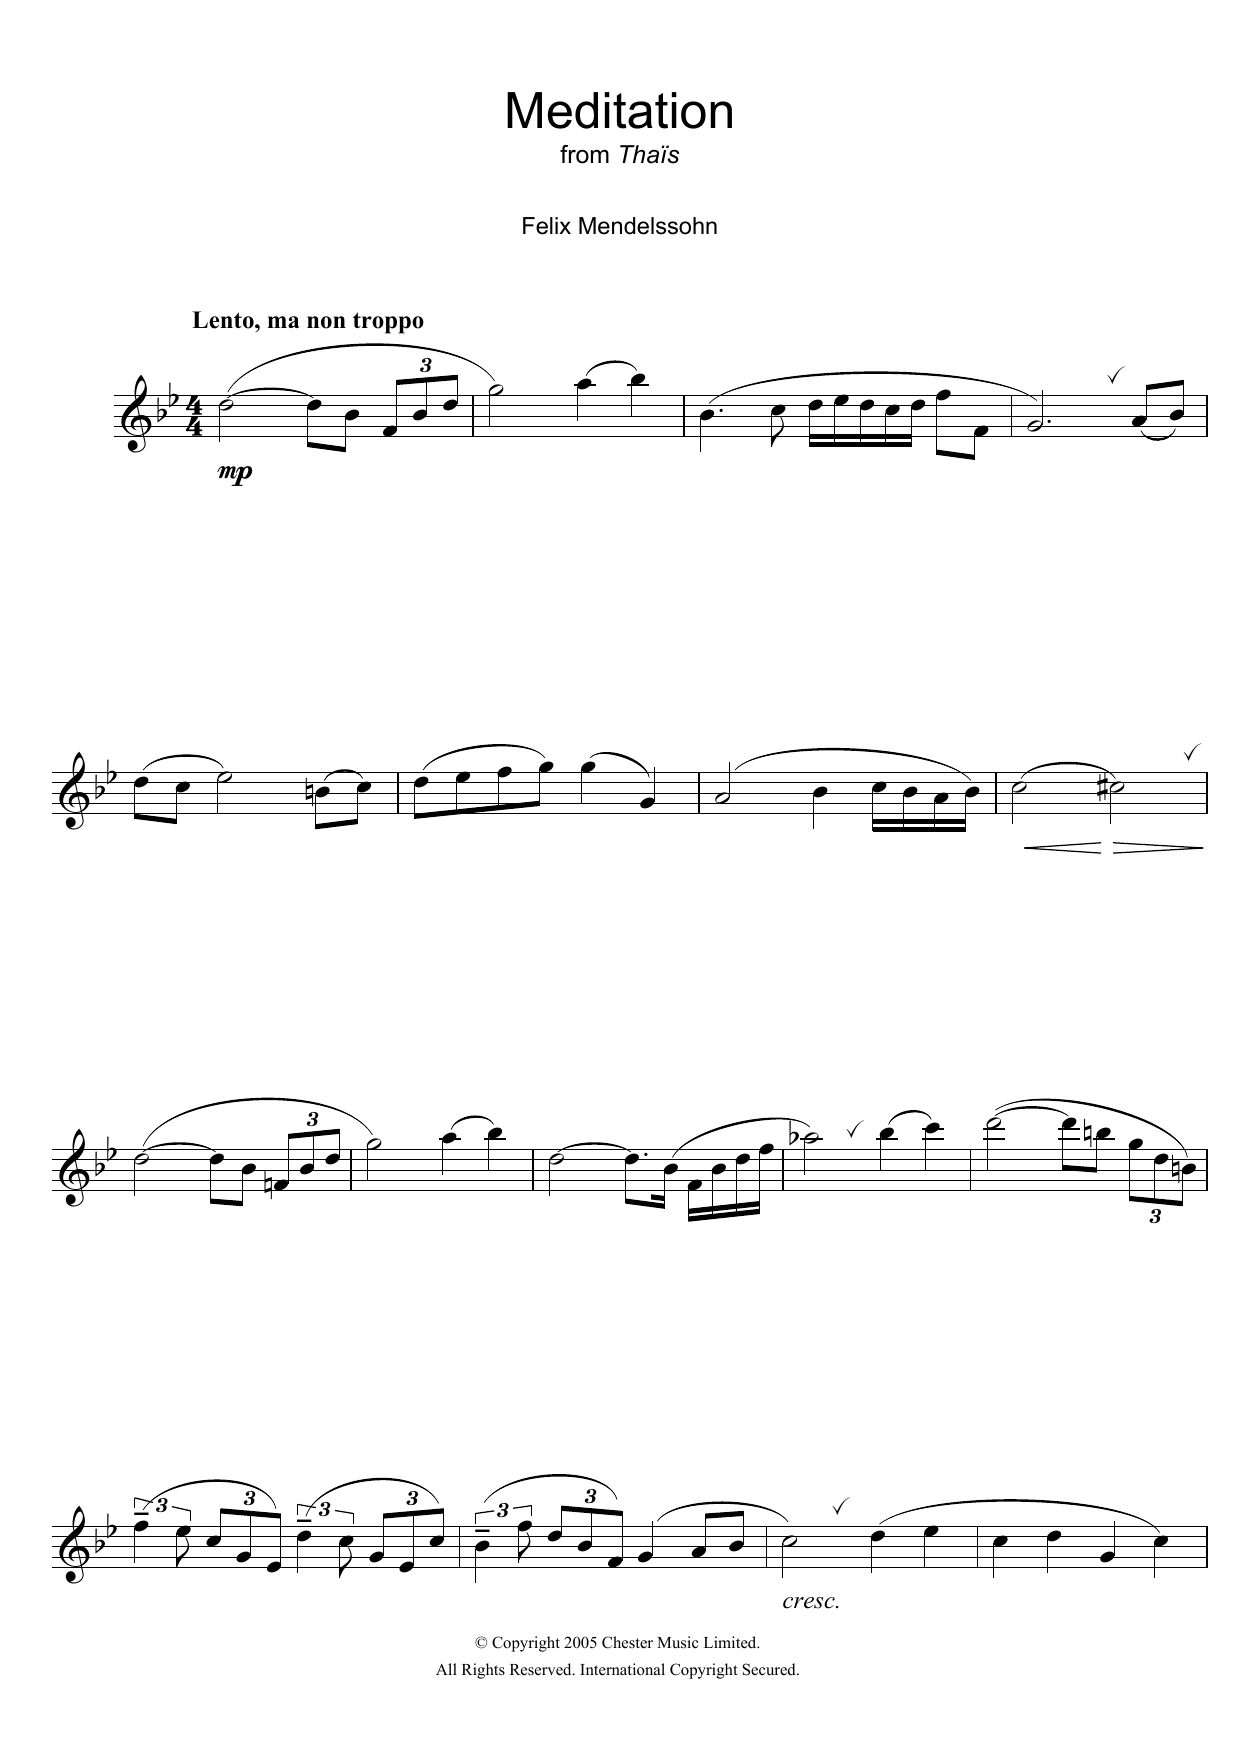 Felix Mendelssohn Meditation From Thais Sheet Music Notes & Chords for Flute - Download or Print PDF